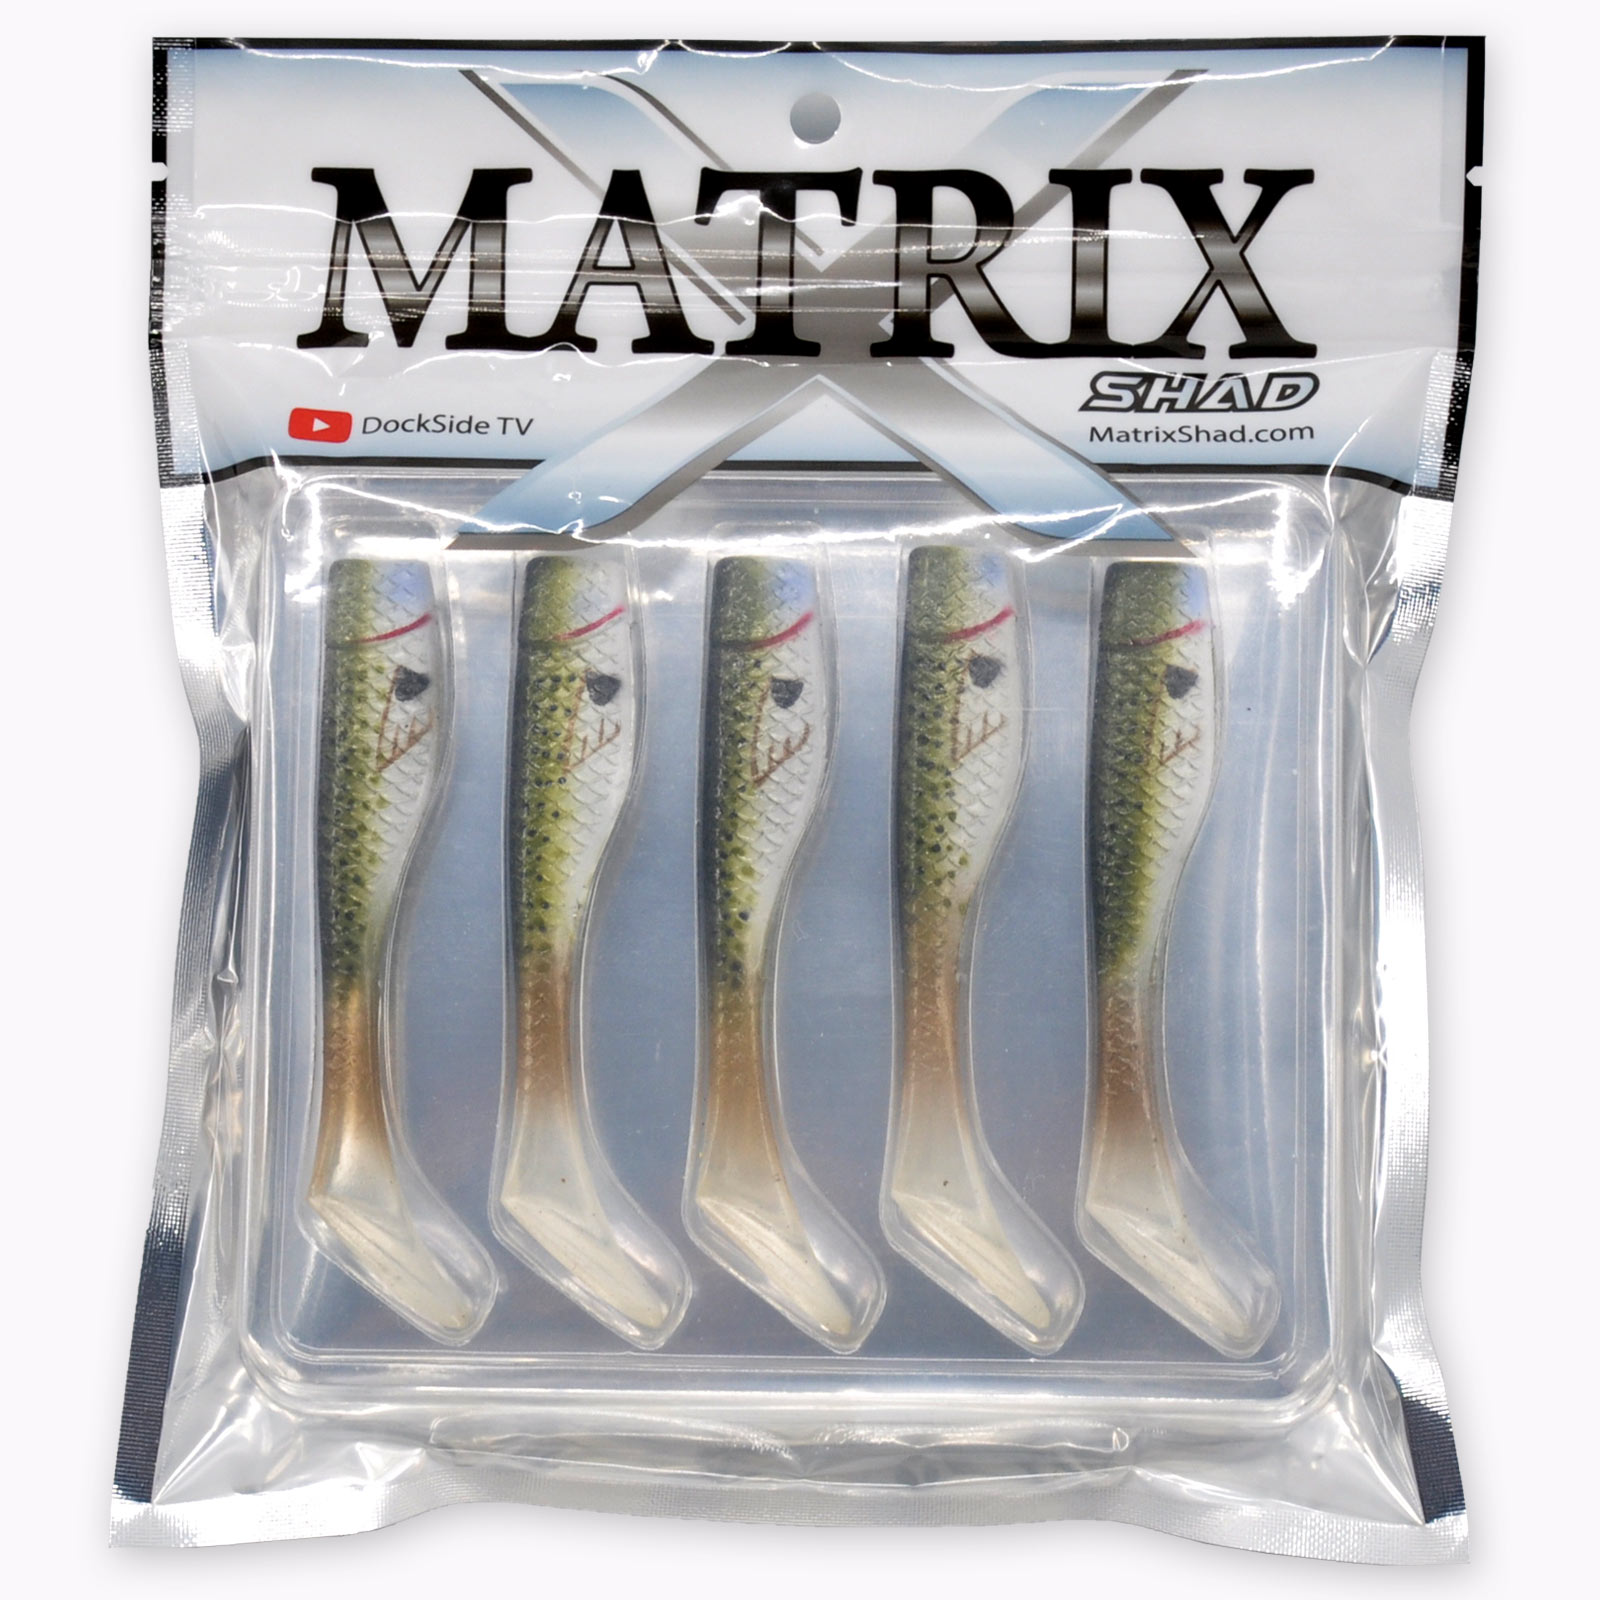 Matrix Shad Fishing Rods -Buy 1 Get 1 Free [Video]